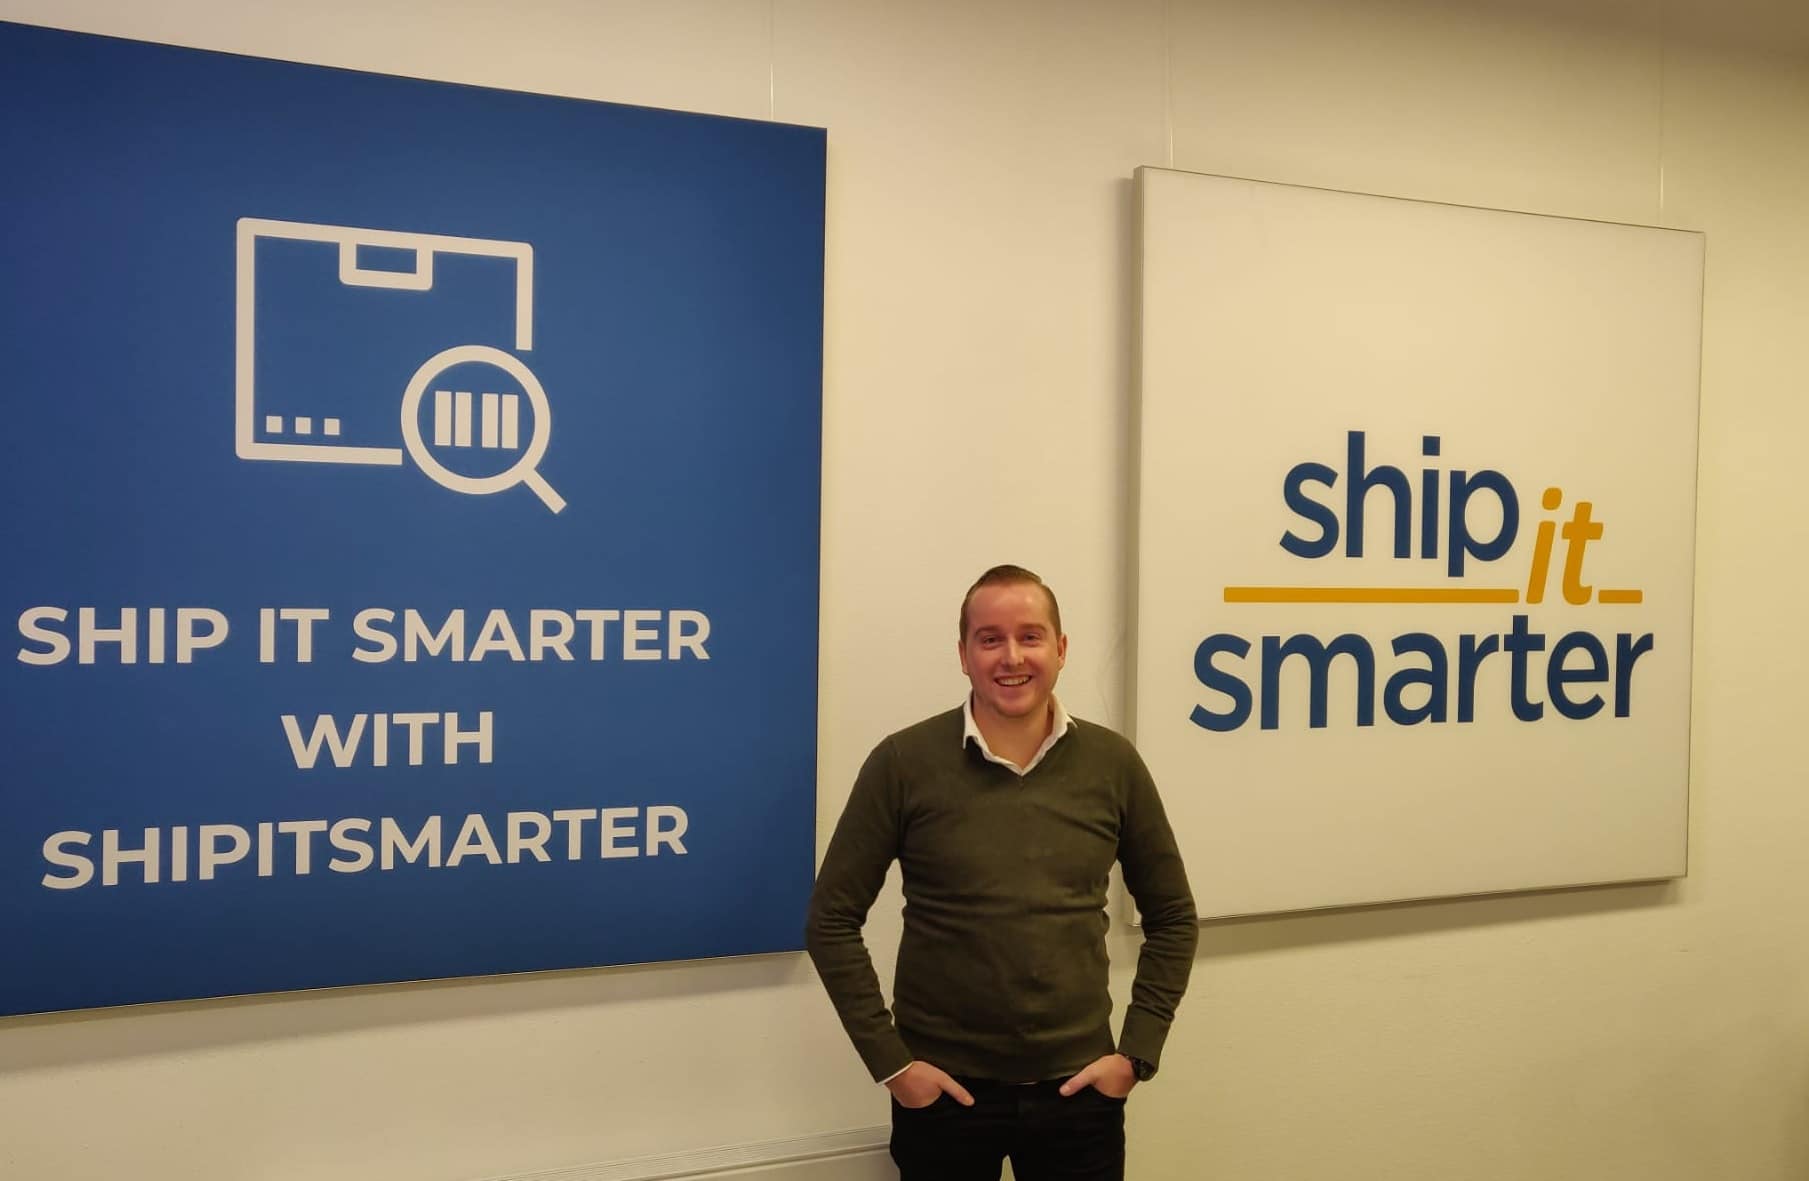 ShipitSmarter expands its commercial workforce